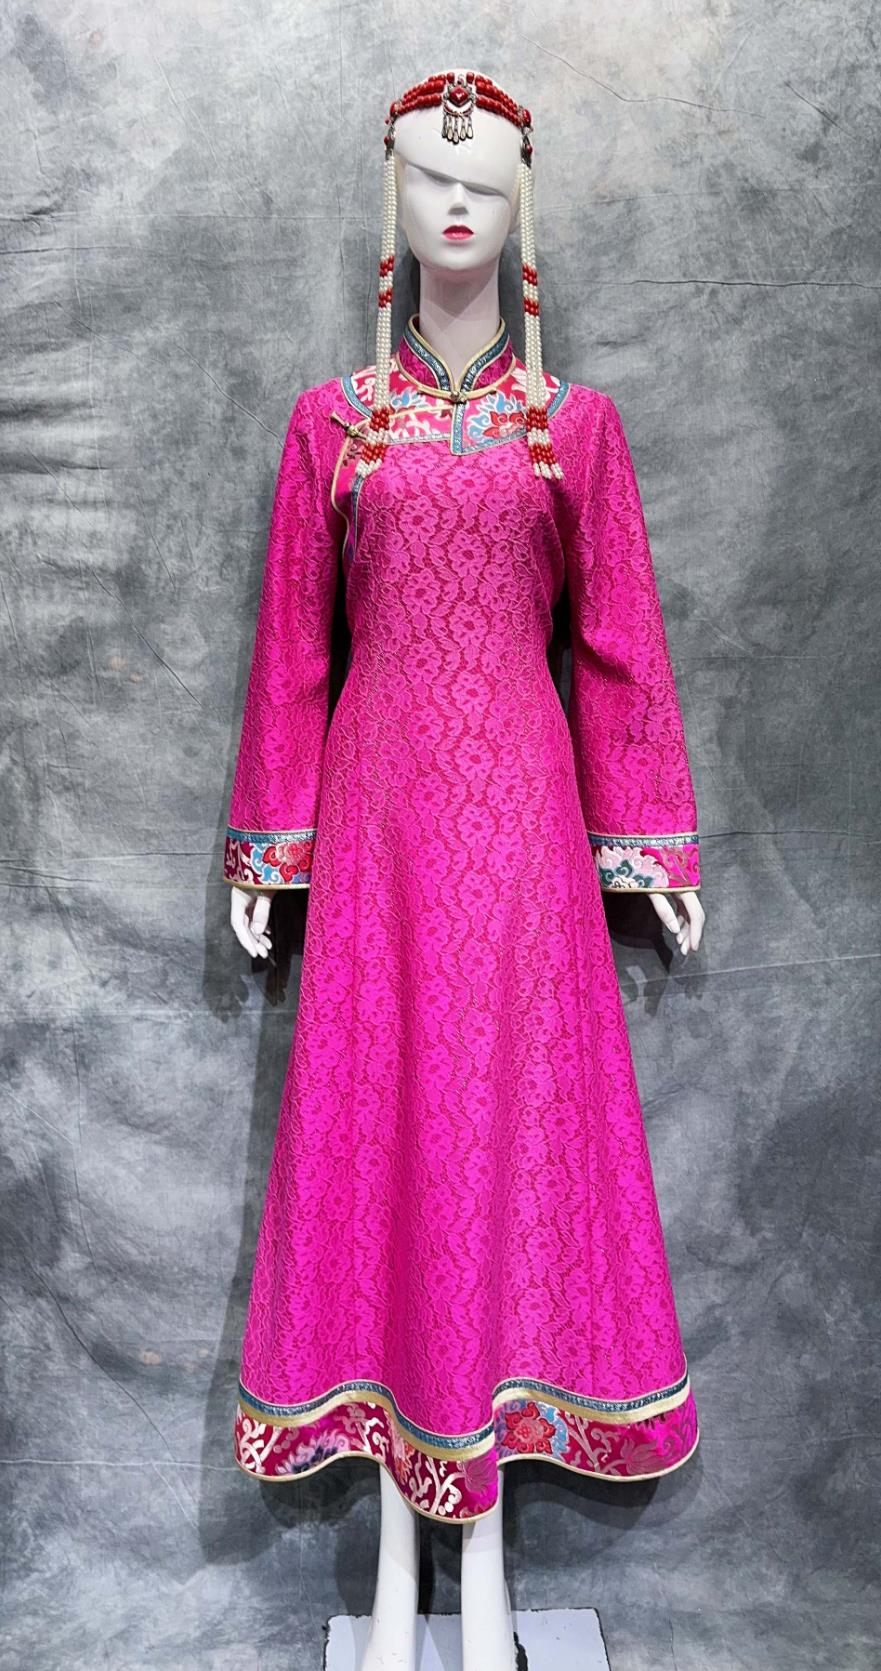 China Daur National Minority Pink Dress Stage Performance Costume Chinese Dahur Ethnic Clothing